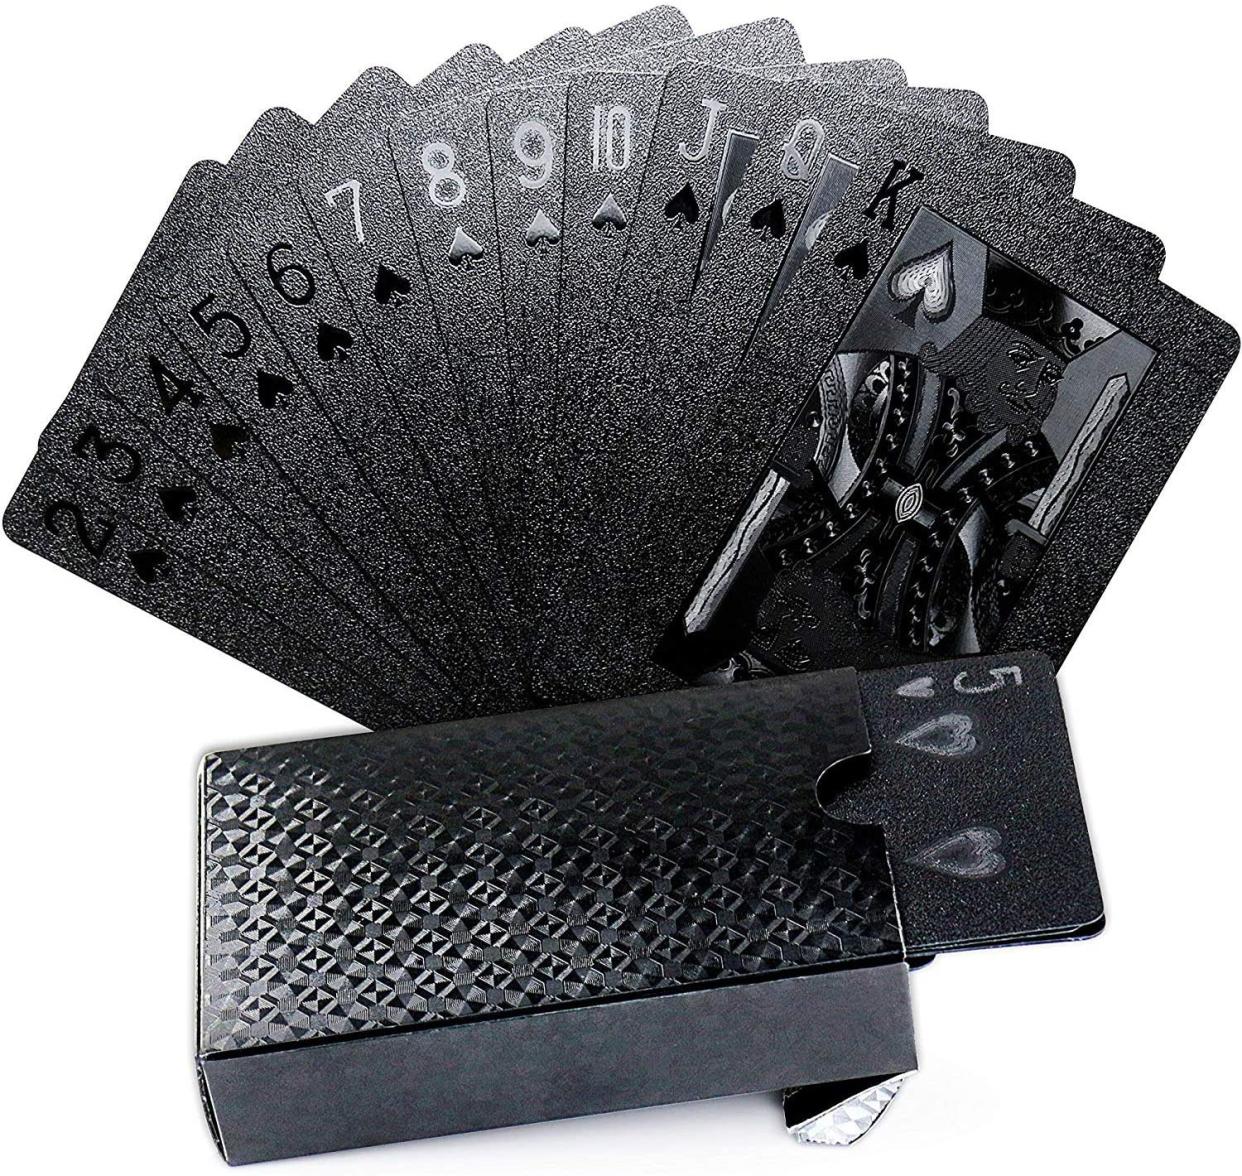 Joyoldelf Cool Black Foil Poker Playing Cards